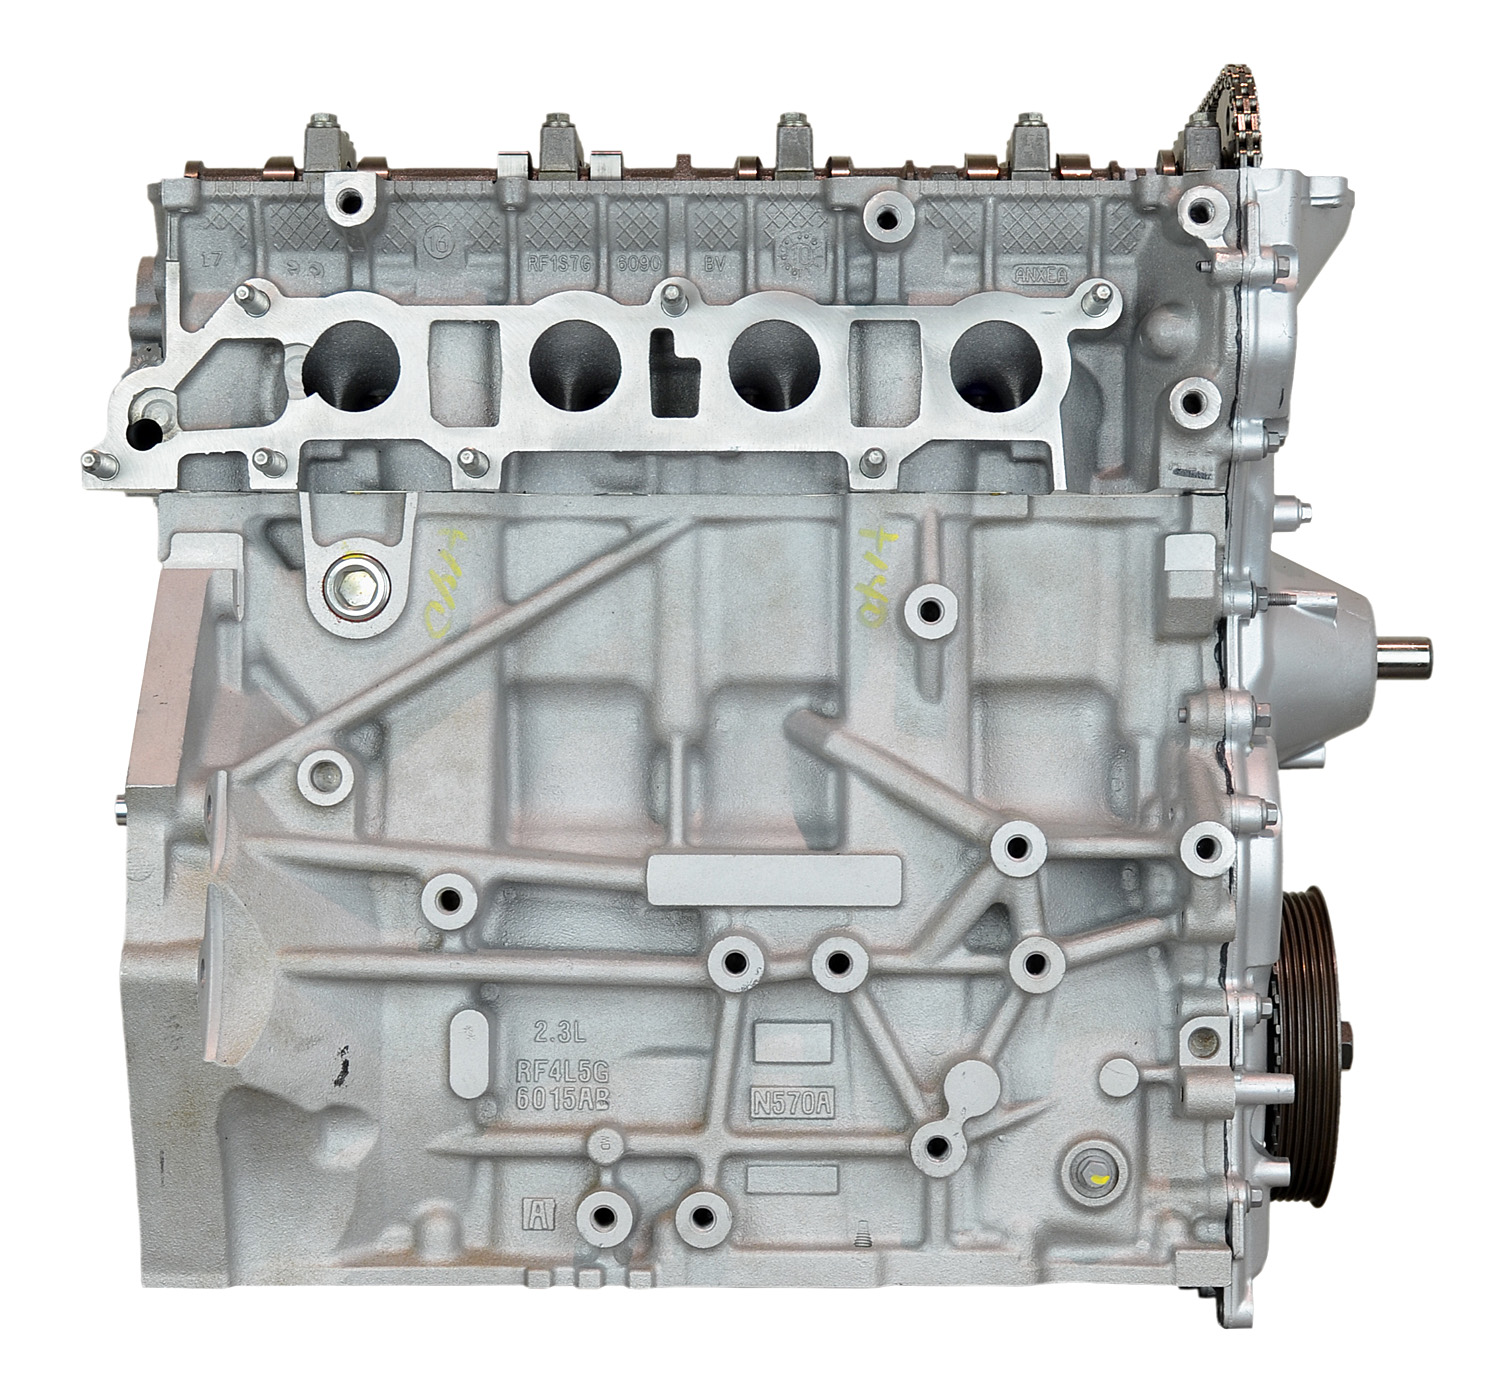 Ford Mazda 2.3L L4 Remanufactured Engine - 2004-2011